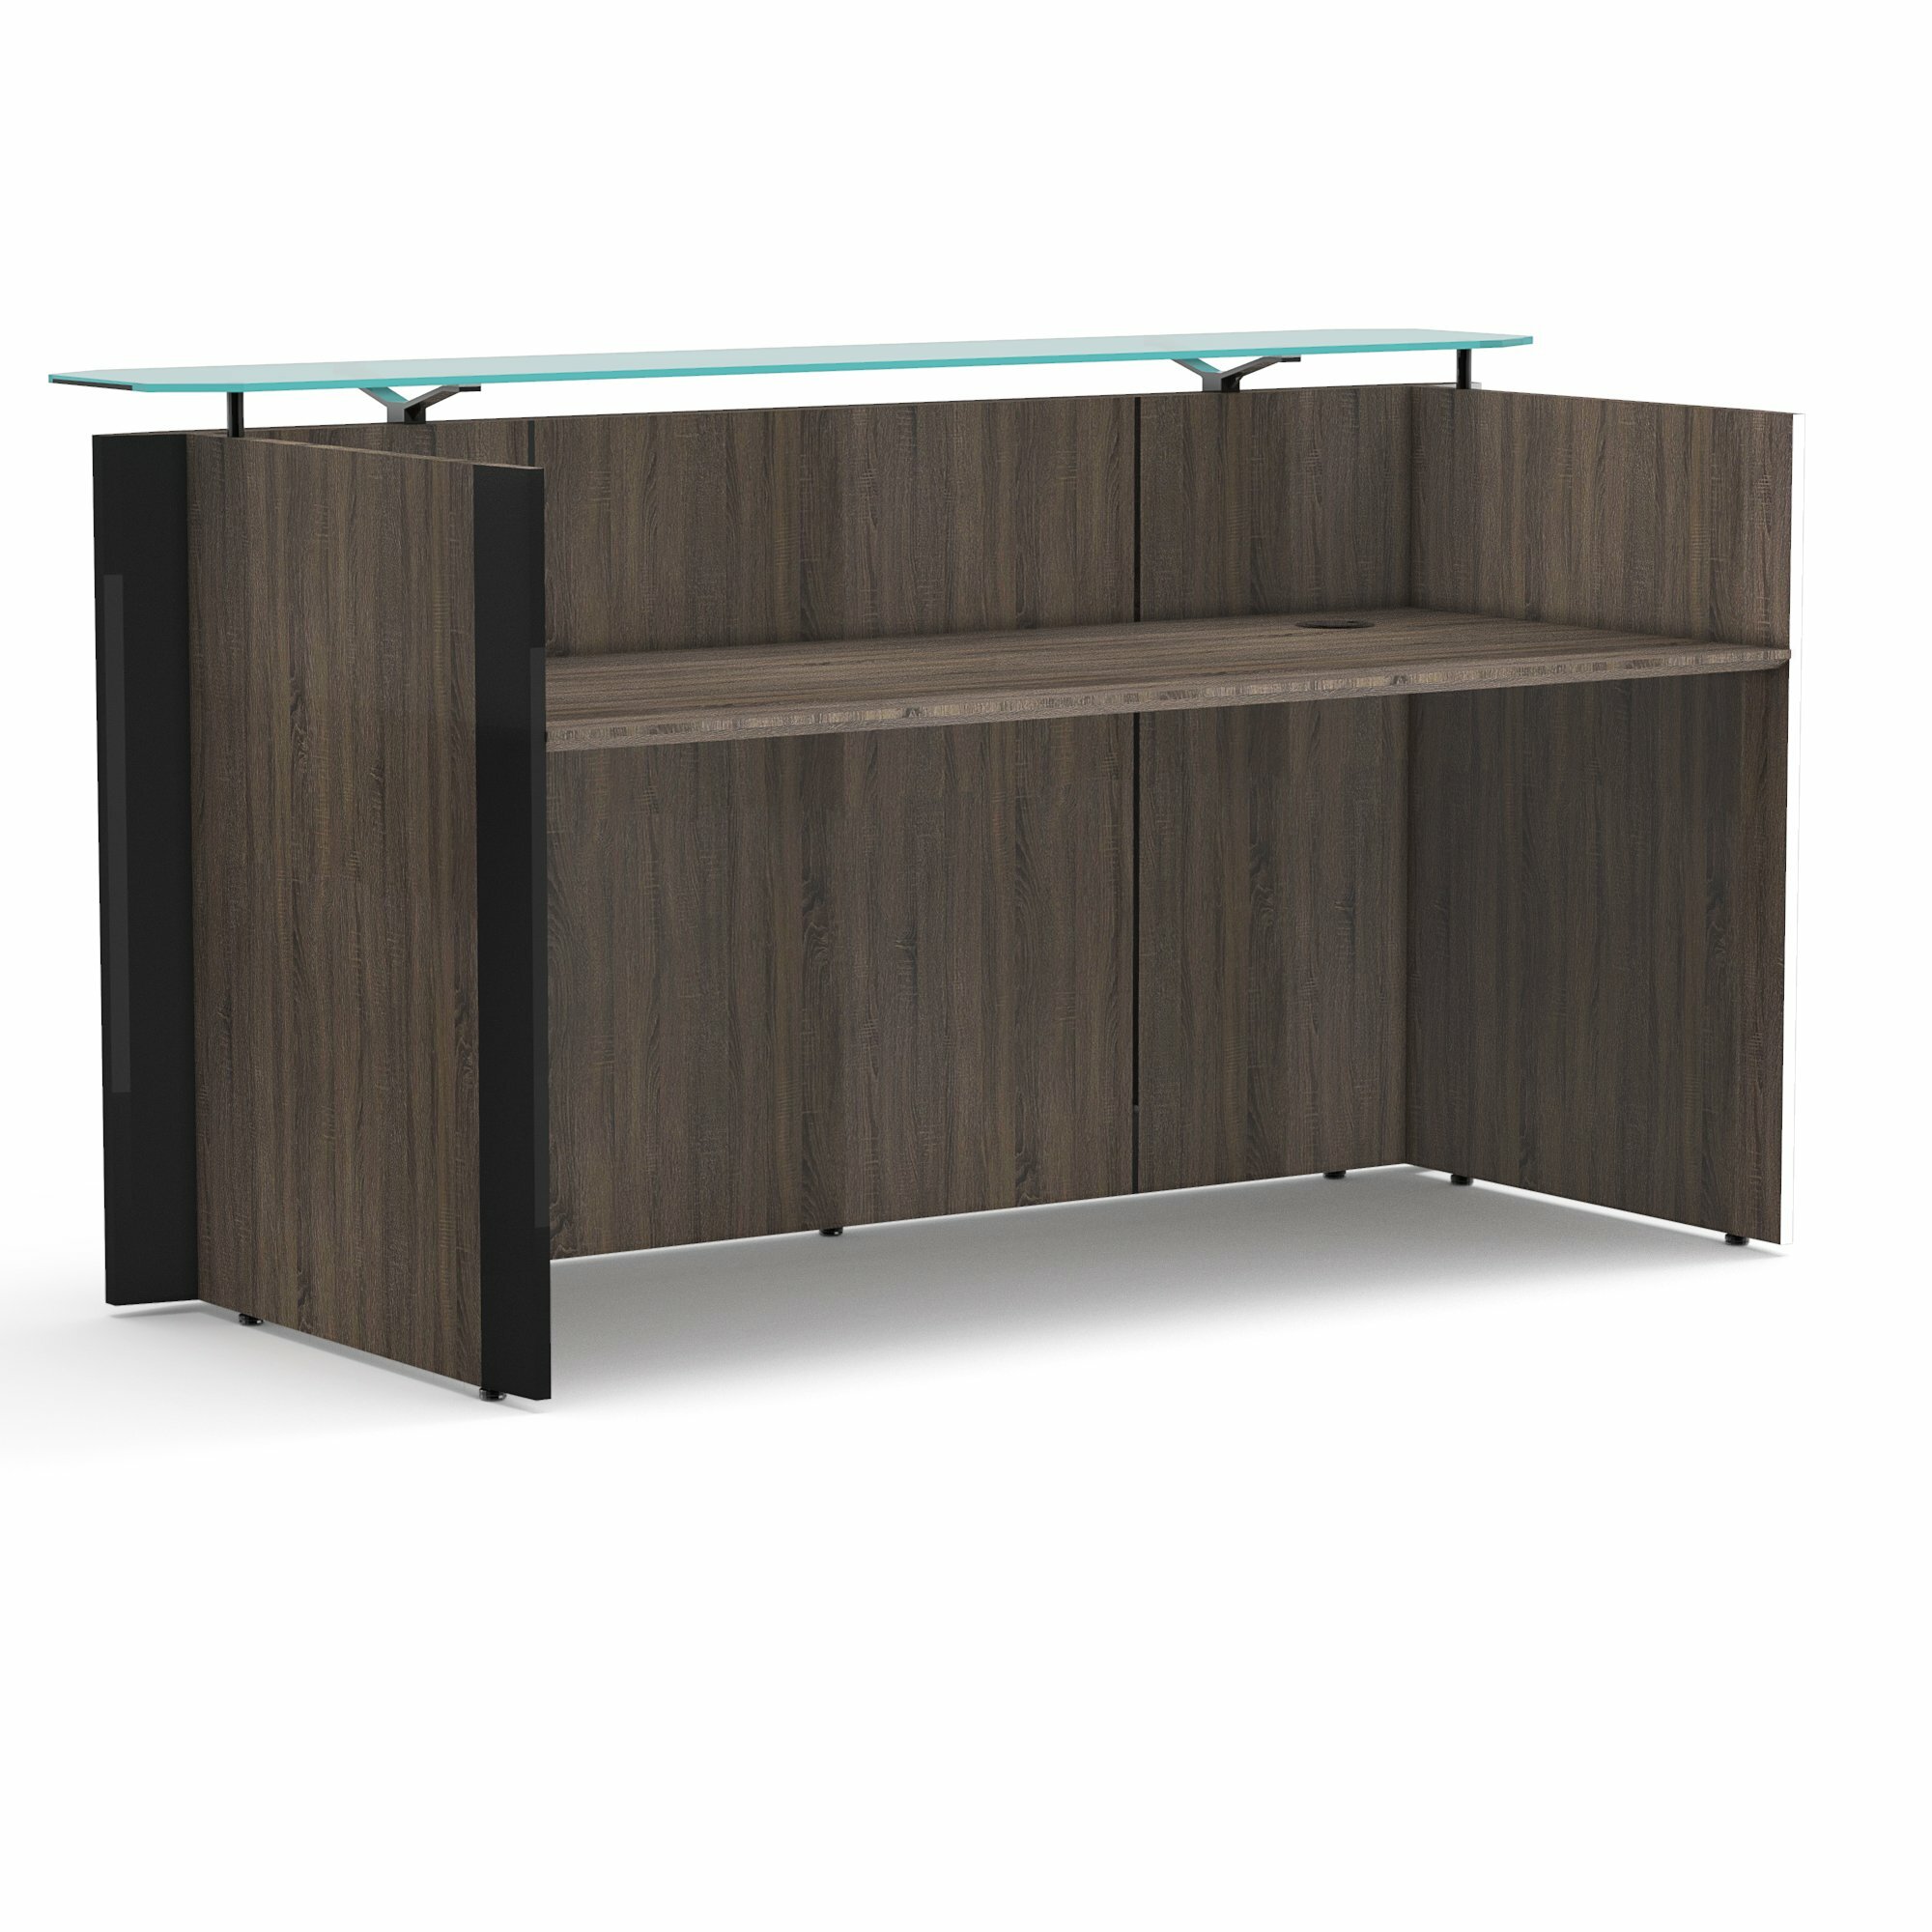 Forward Furniture Allure Reception Desk Wayfair